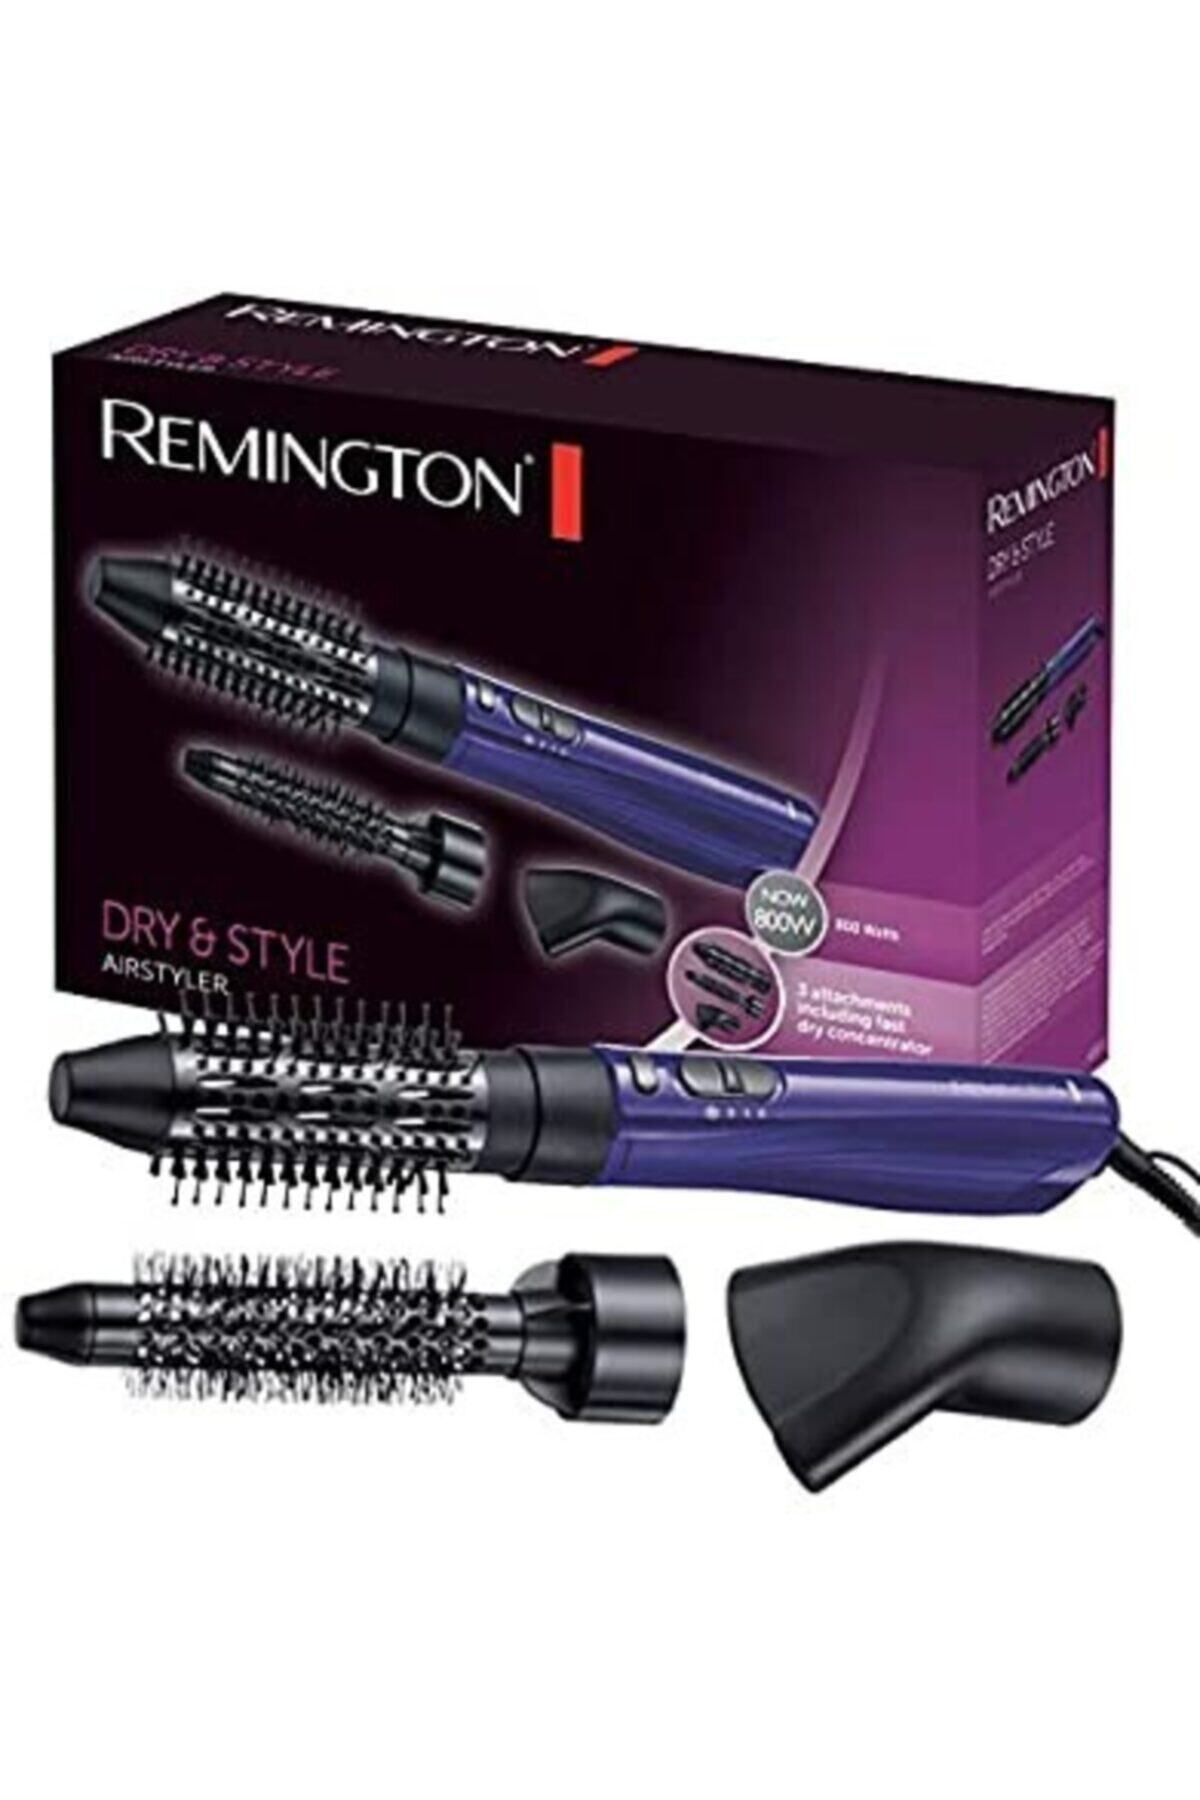 Remington As800 Dry Style Airstyler Saç Şekillendirici Seti